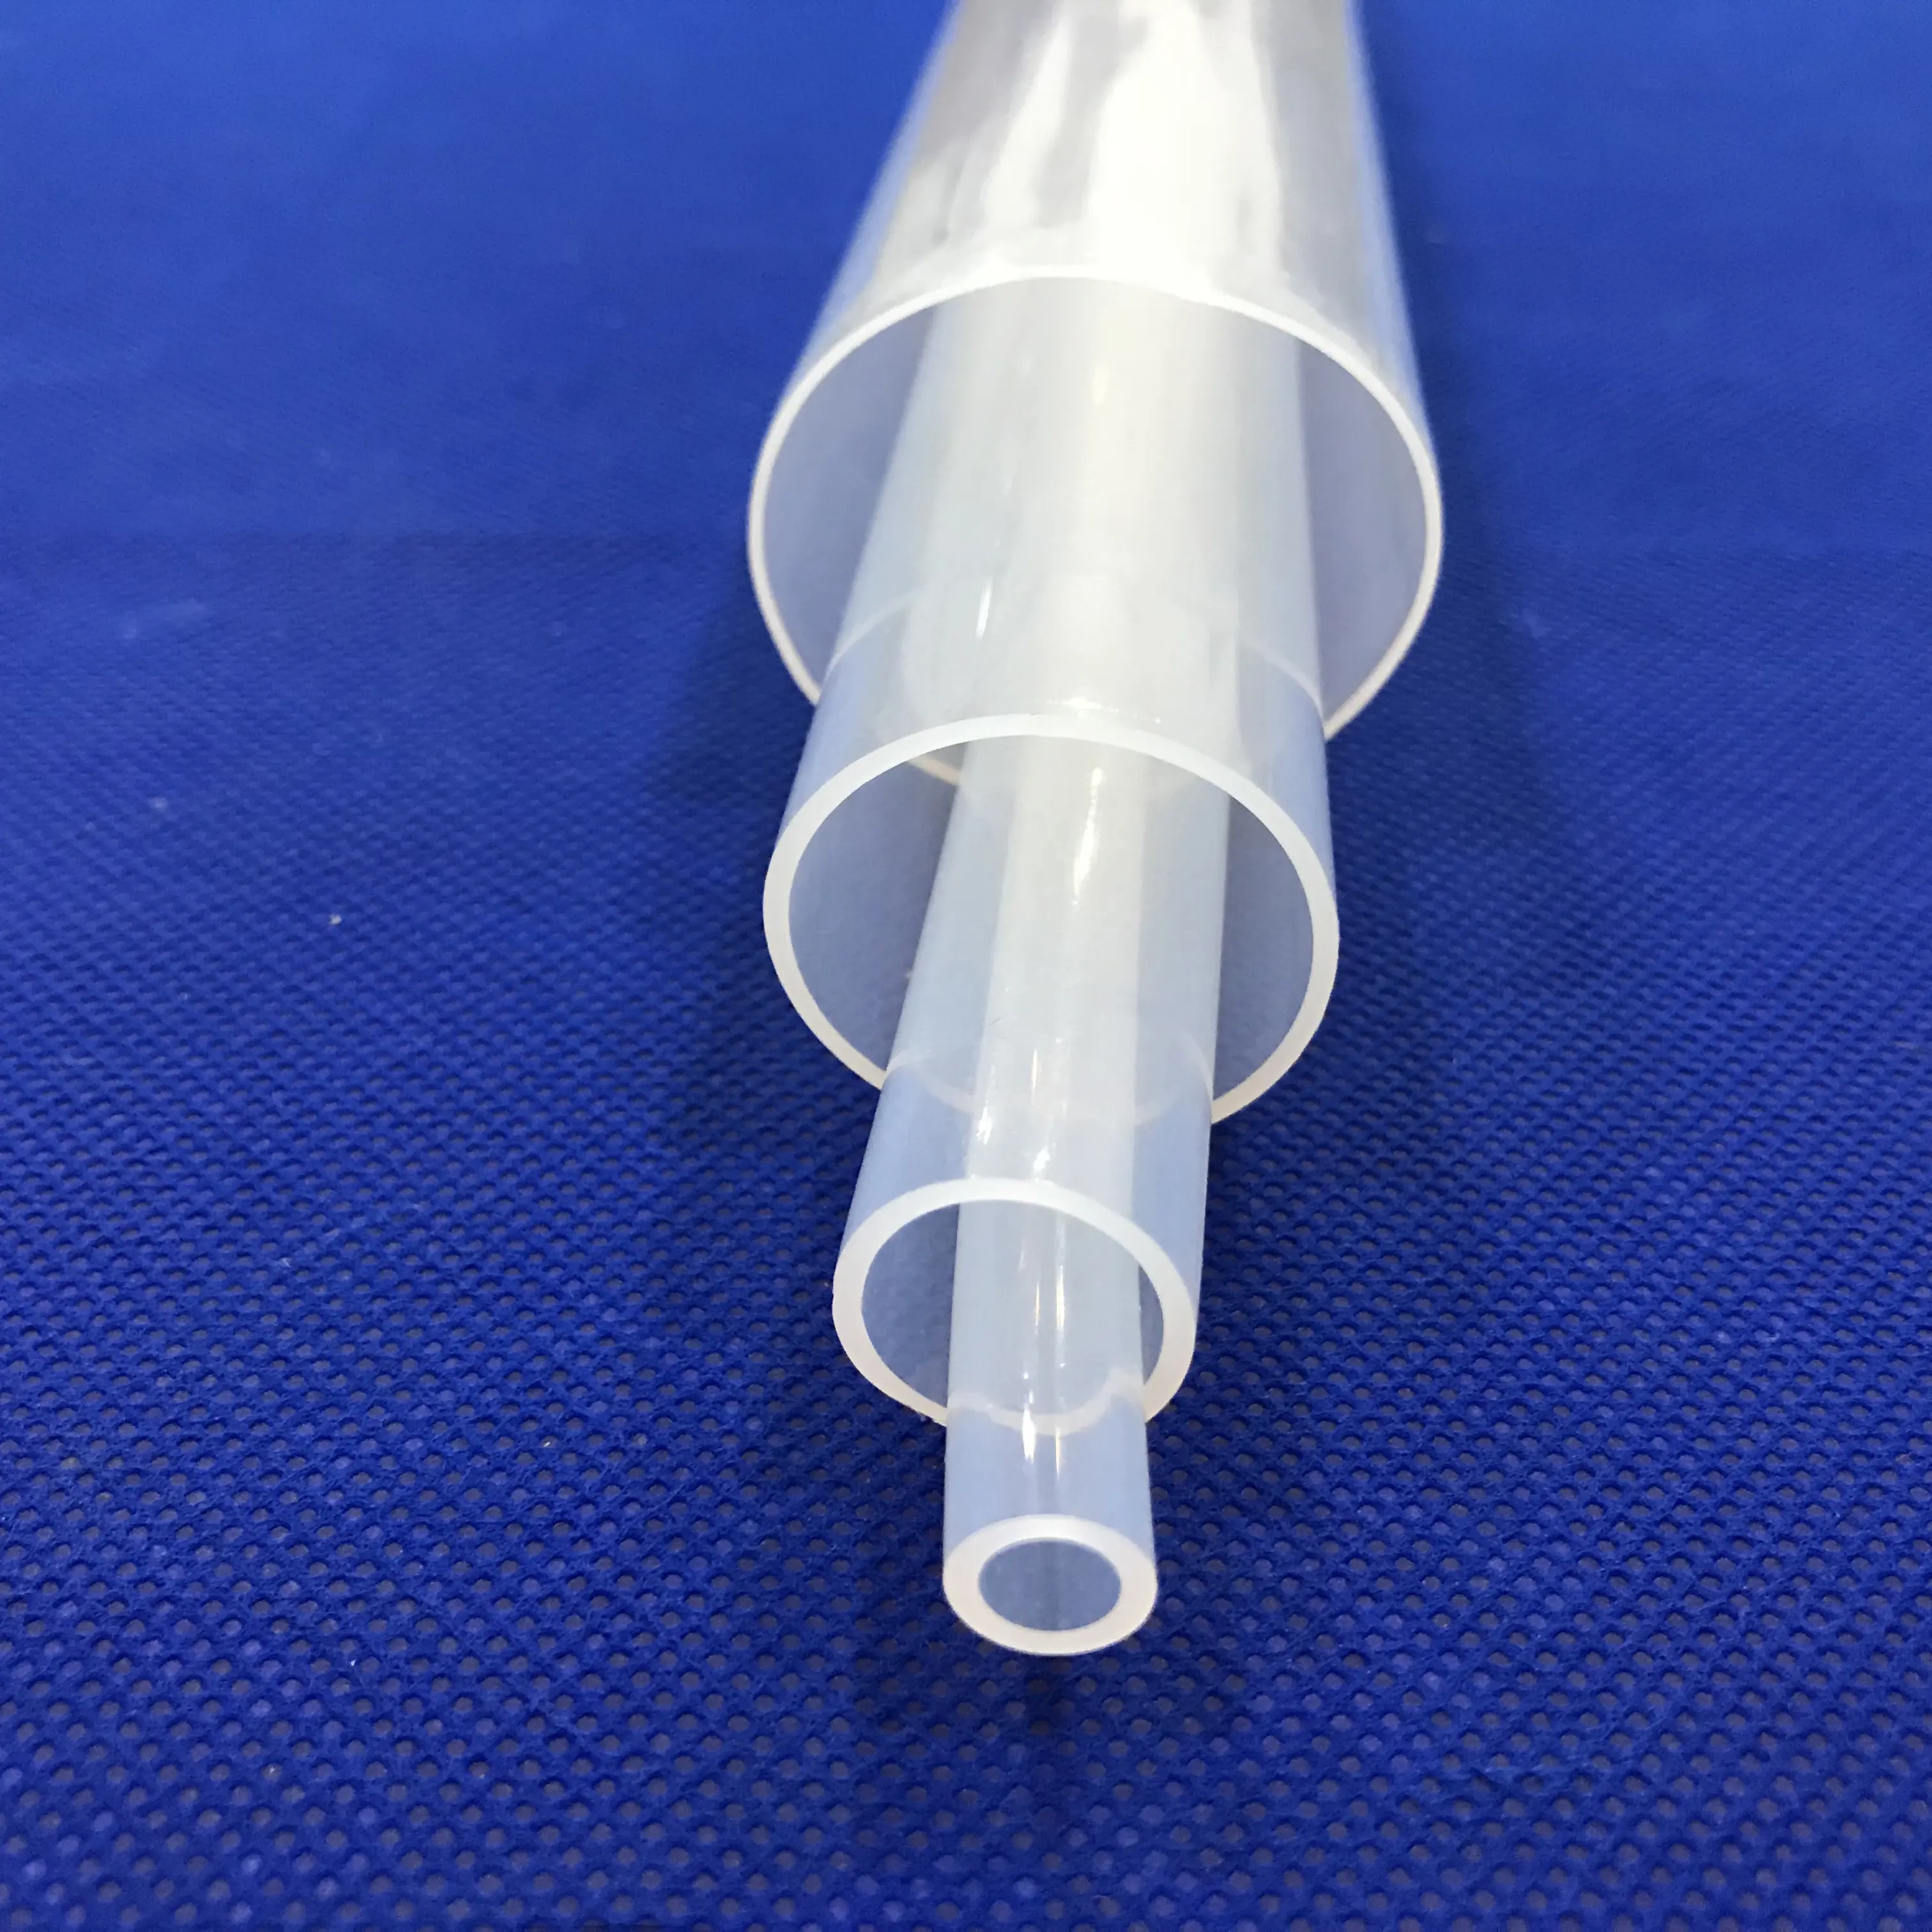 Tubo FEP F46, tubo de plástico transparente resistente al calor, tubo FEP